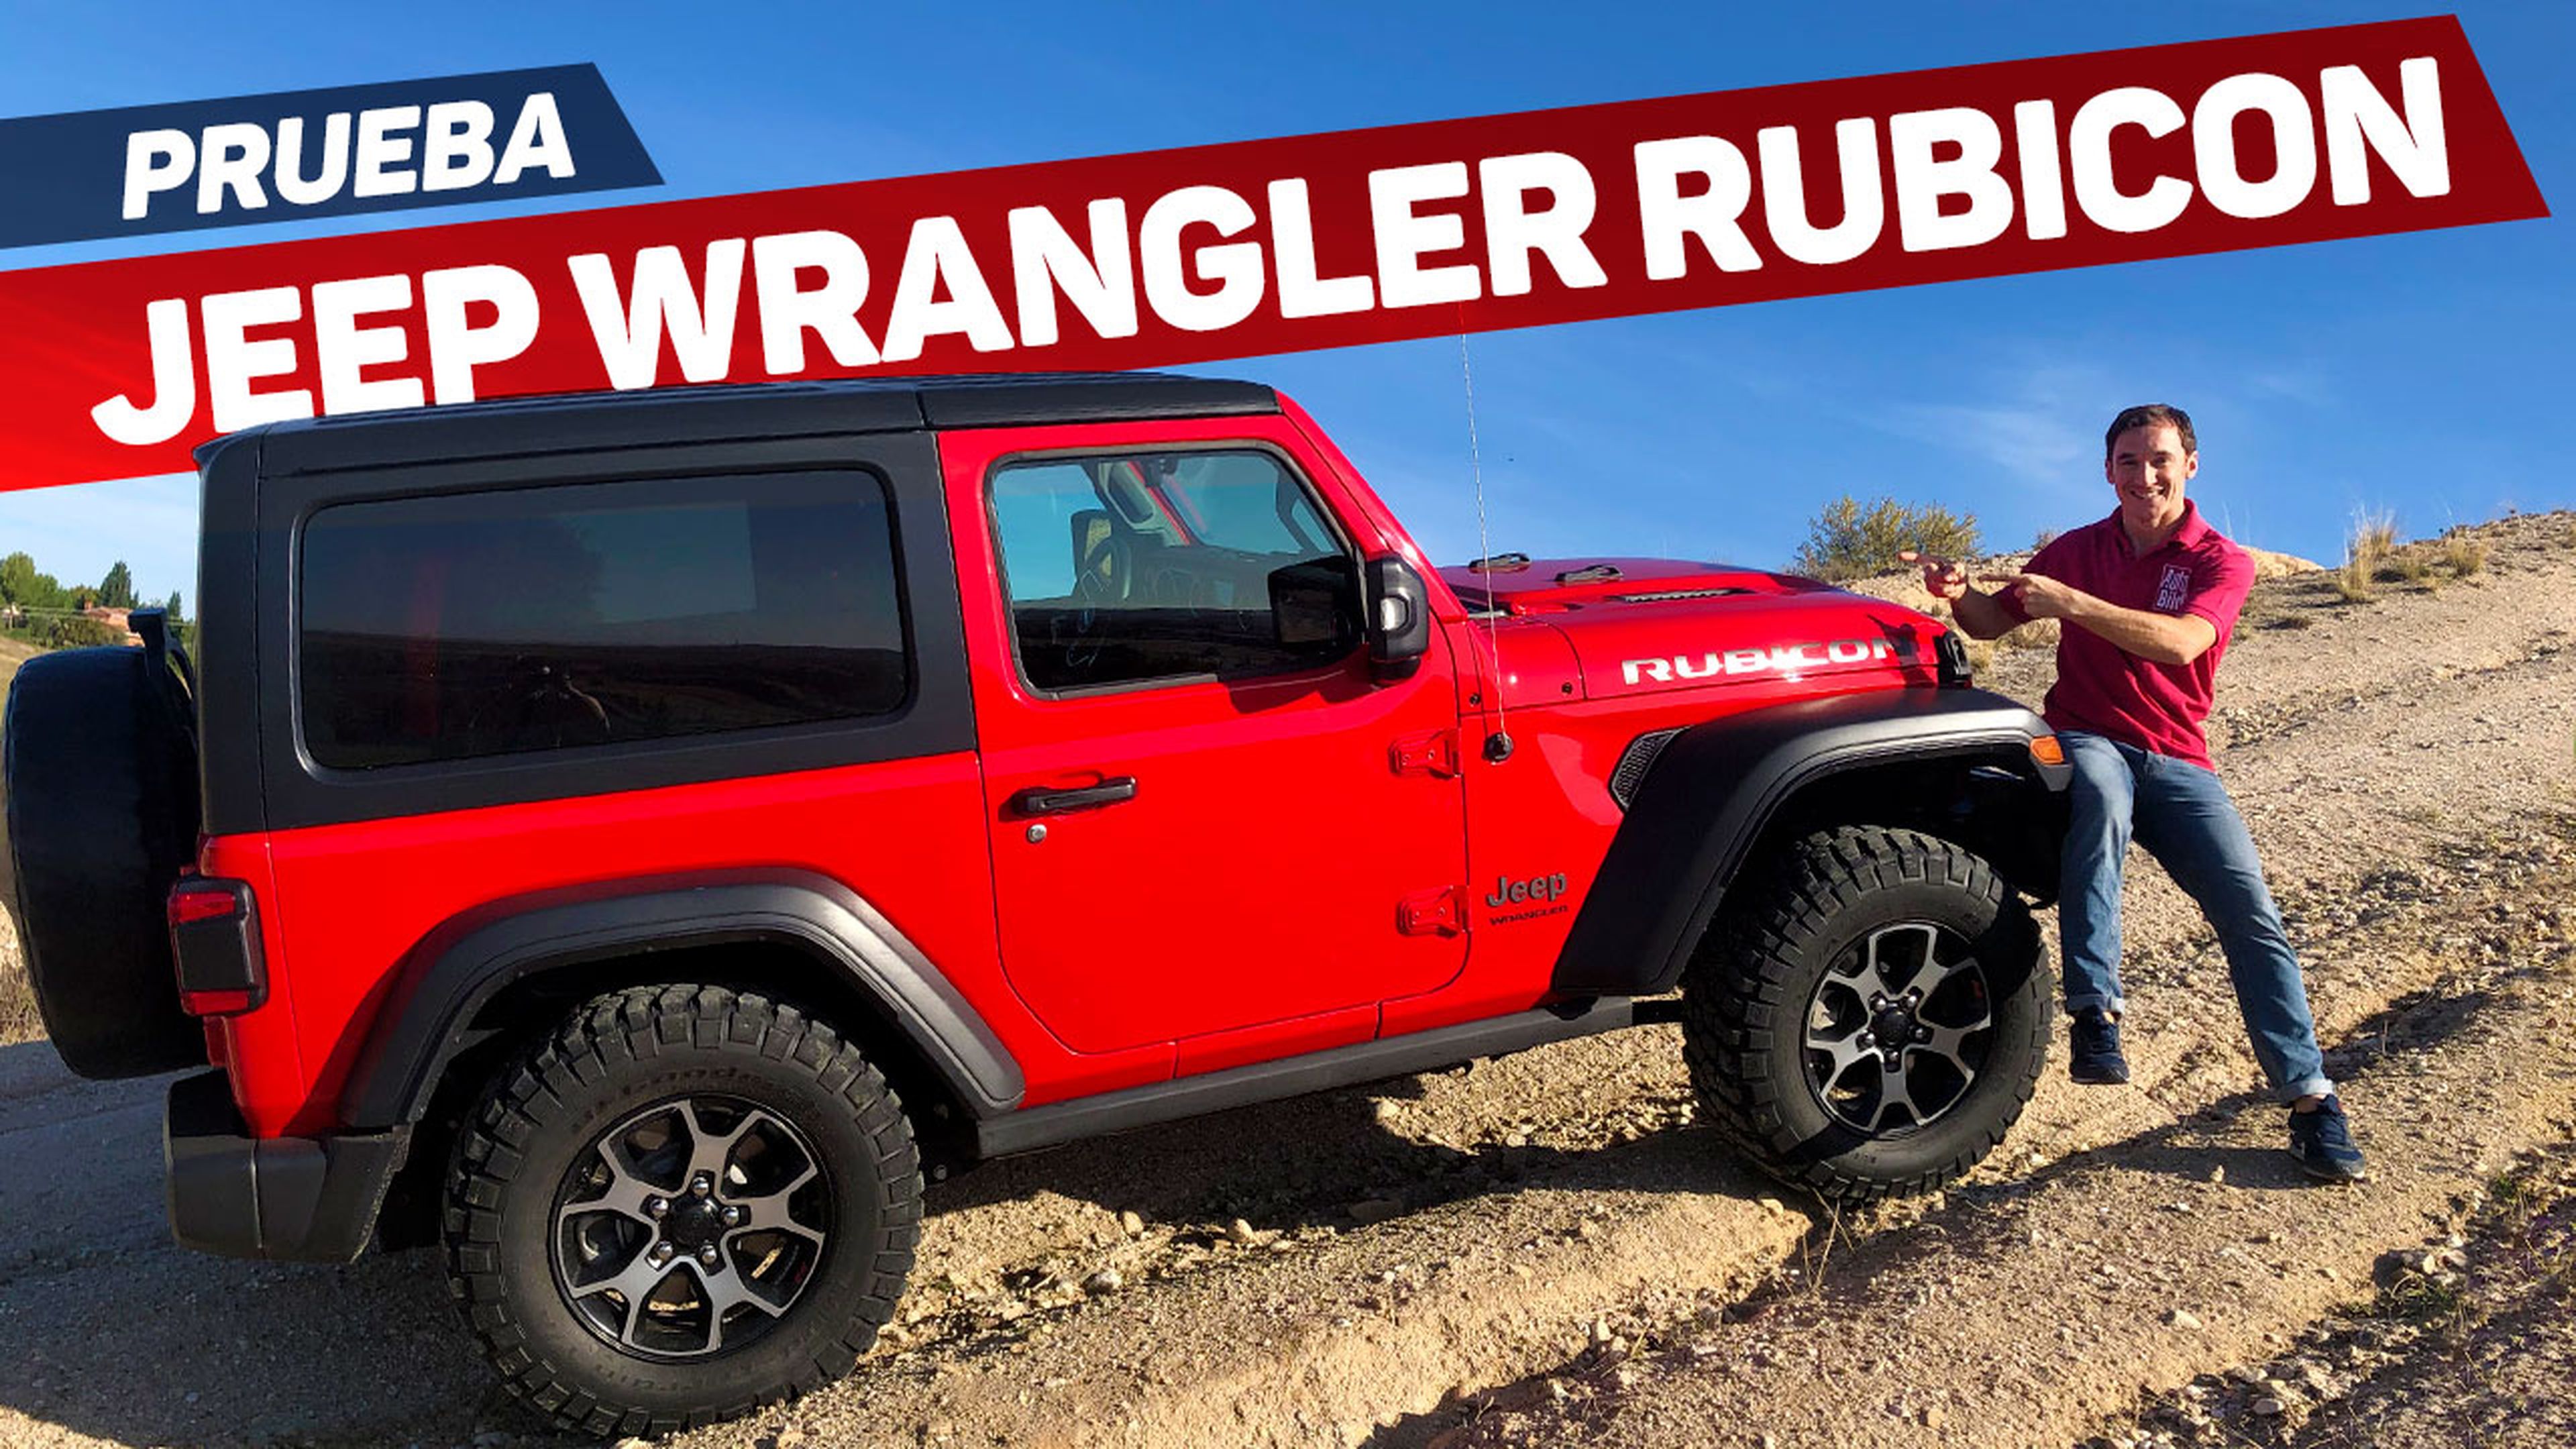 VÍDEO: Prueba Jeep Wrangler Rubicon